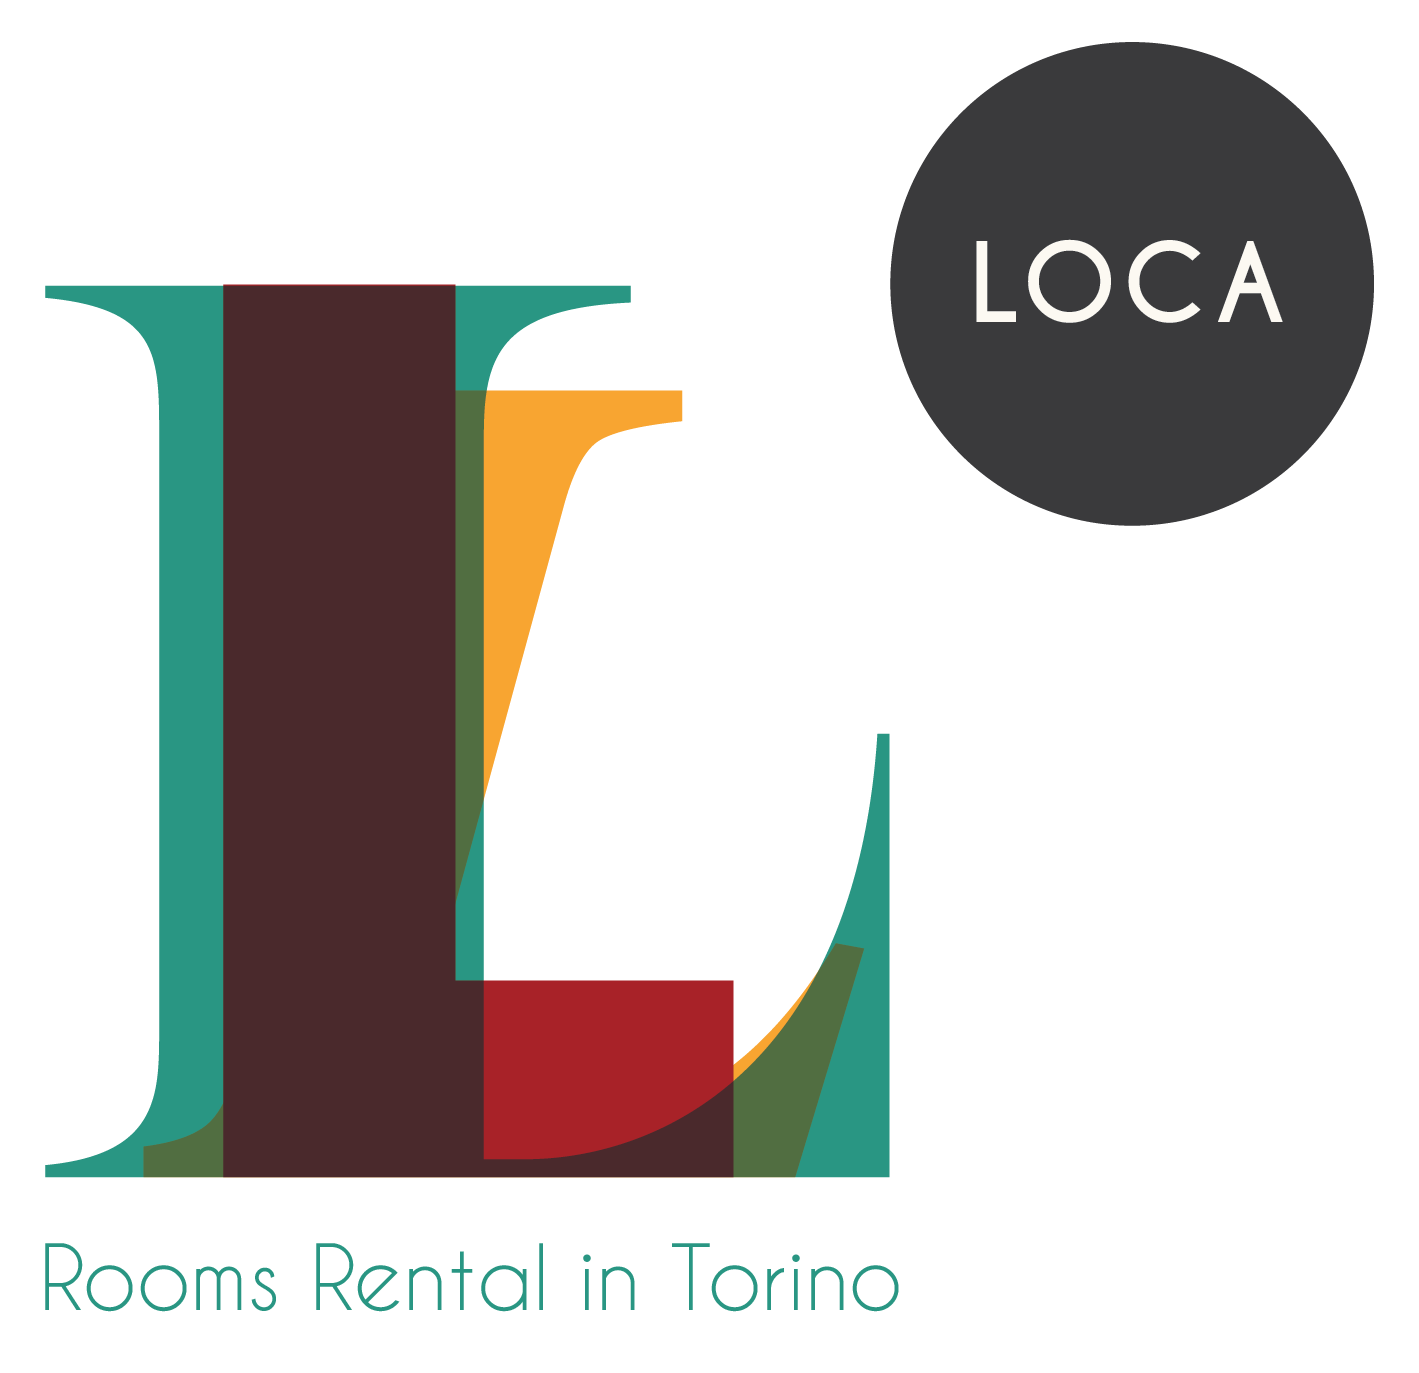 Rooms Rental in Torino